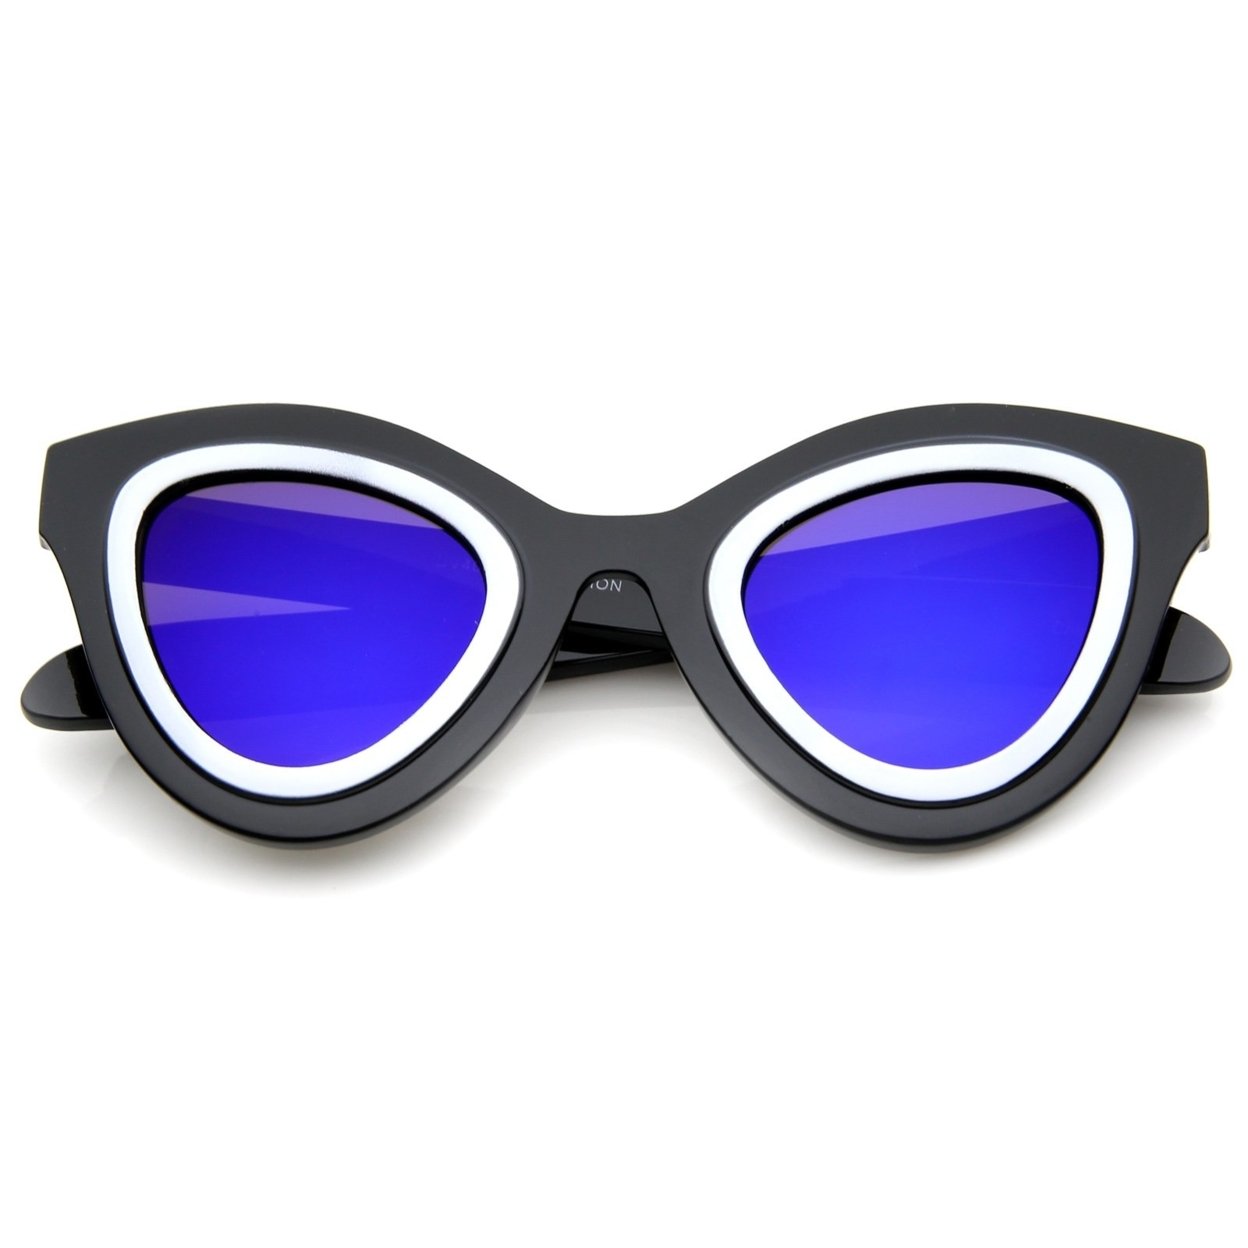 Womens High Fashion Two-Toned Mirrored Cat Eye Sunglasses 42mm - Shiny Black-White / Magenta Mirror